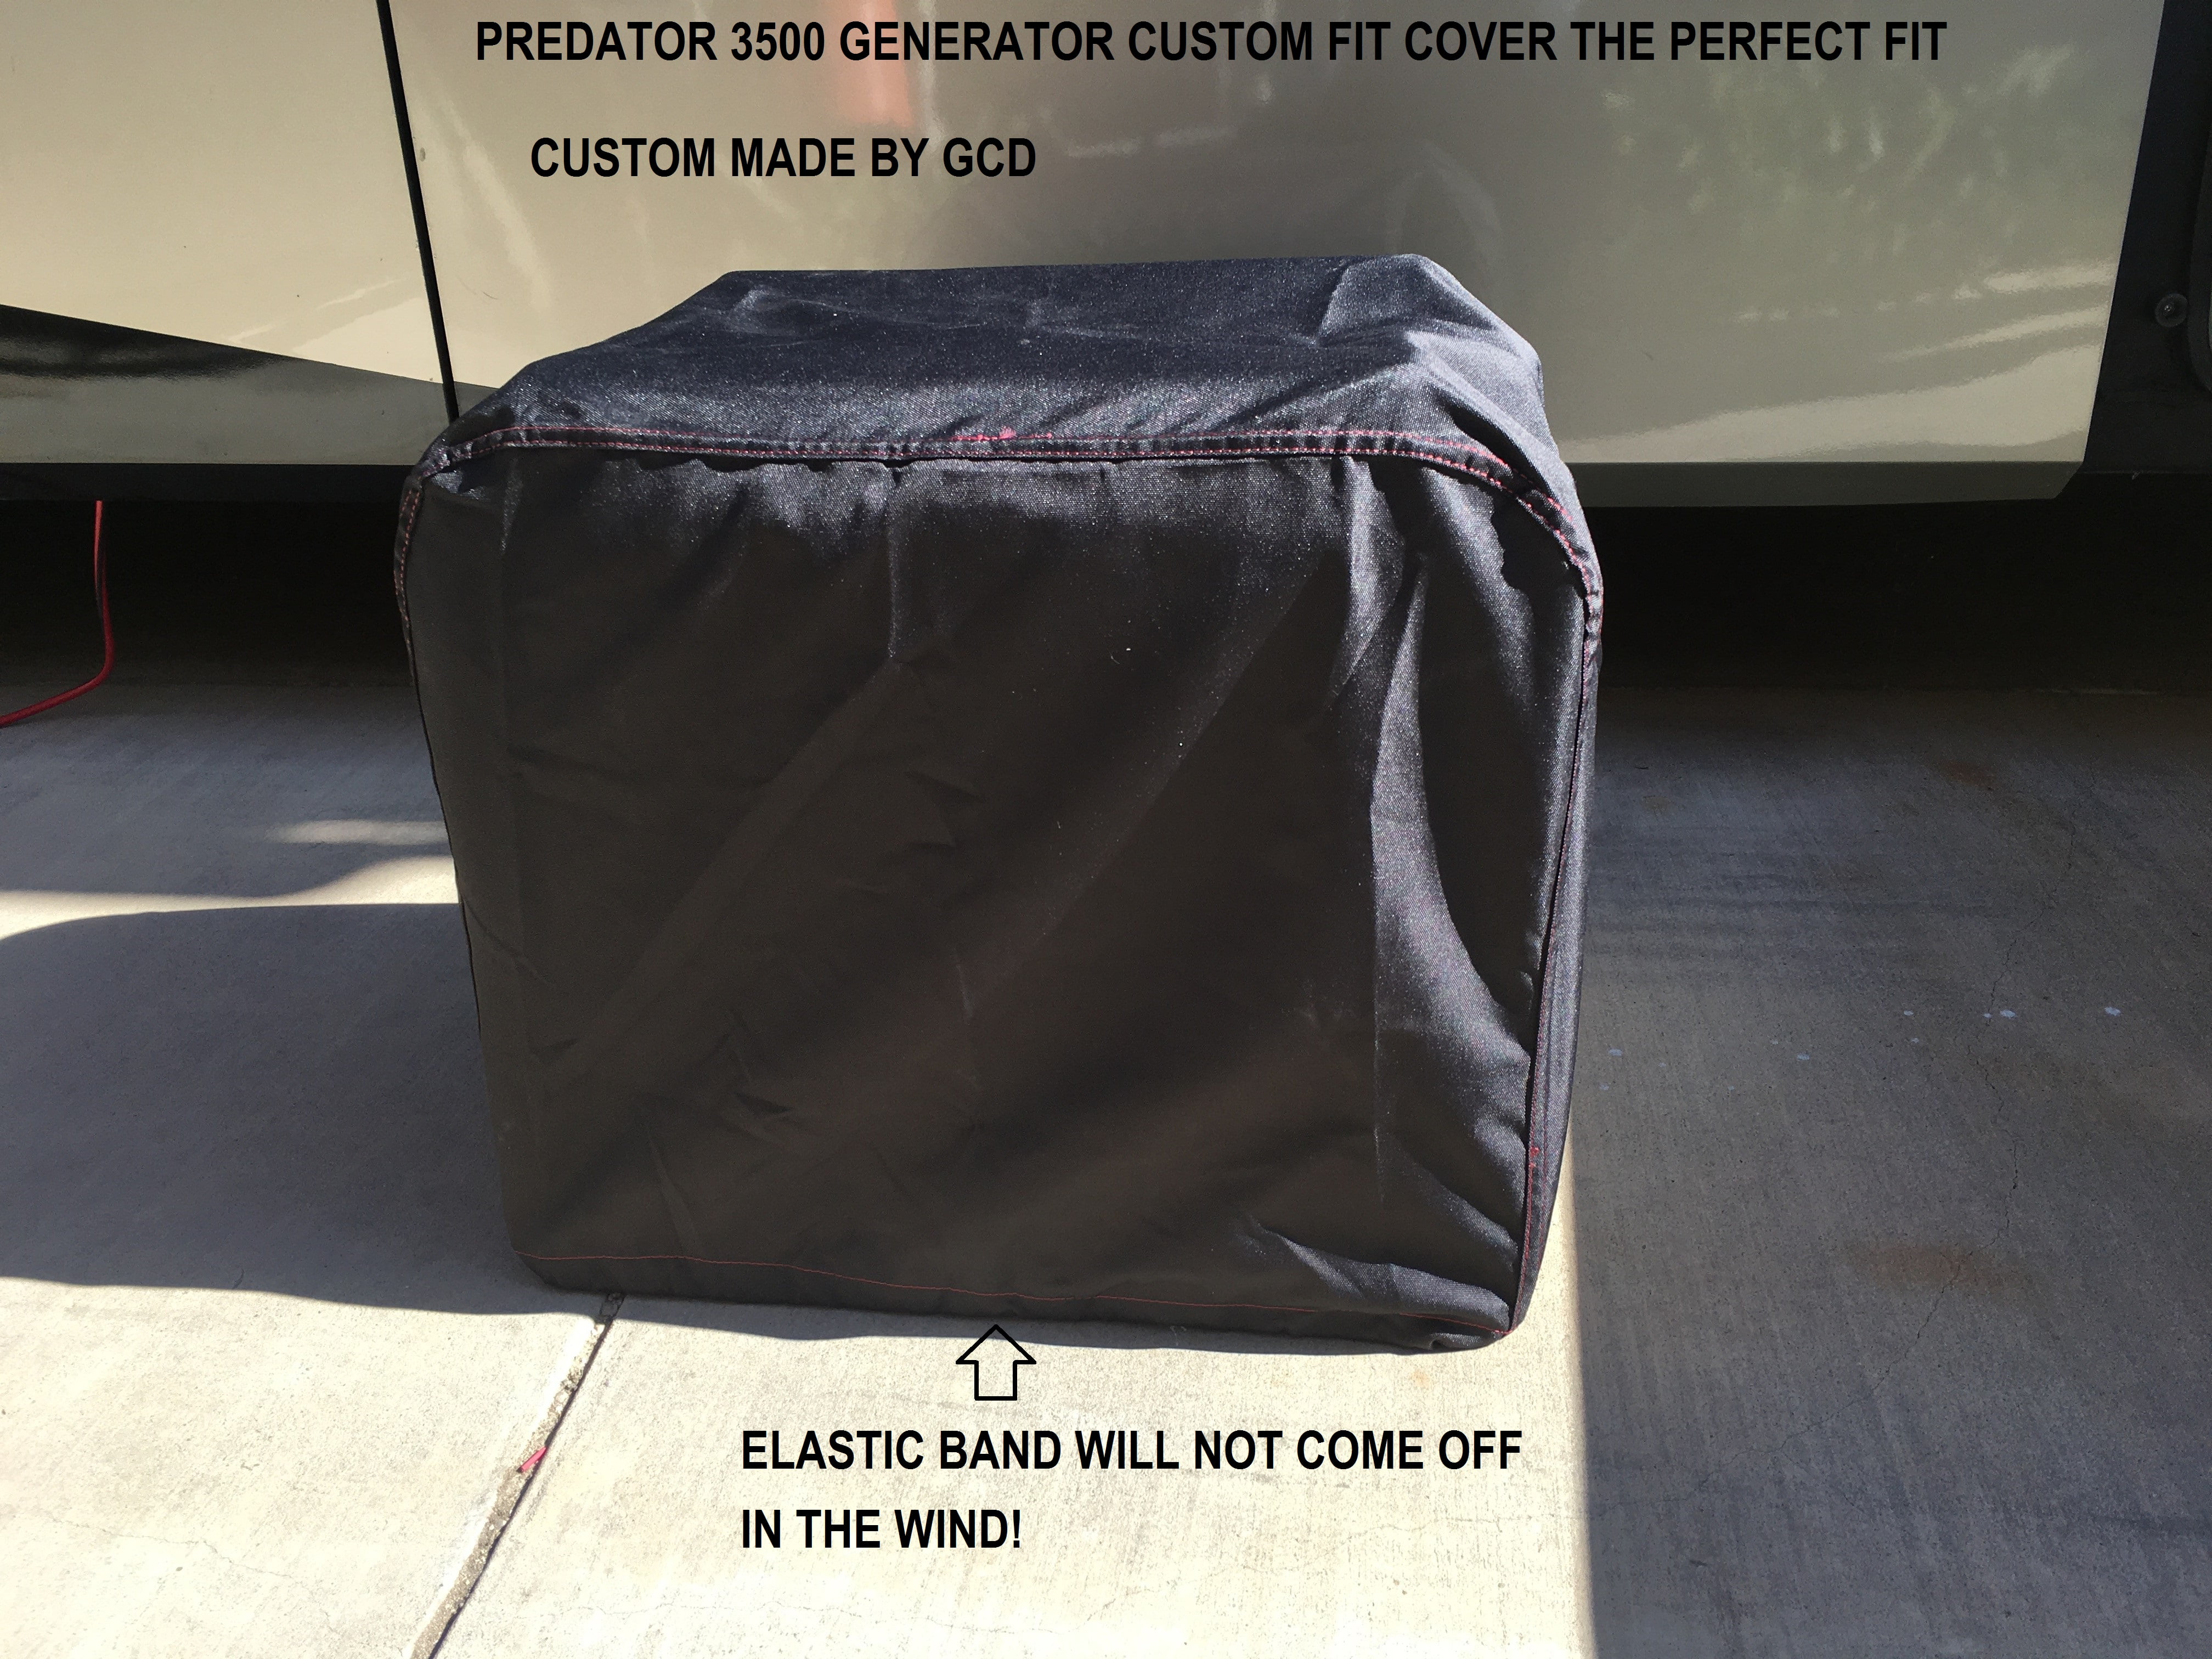 Waterproof Heavy Duty Generator Cover for iGen4500 and Predator 3500 